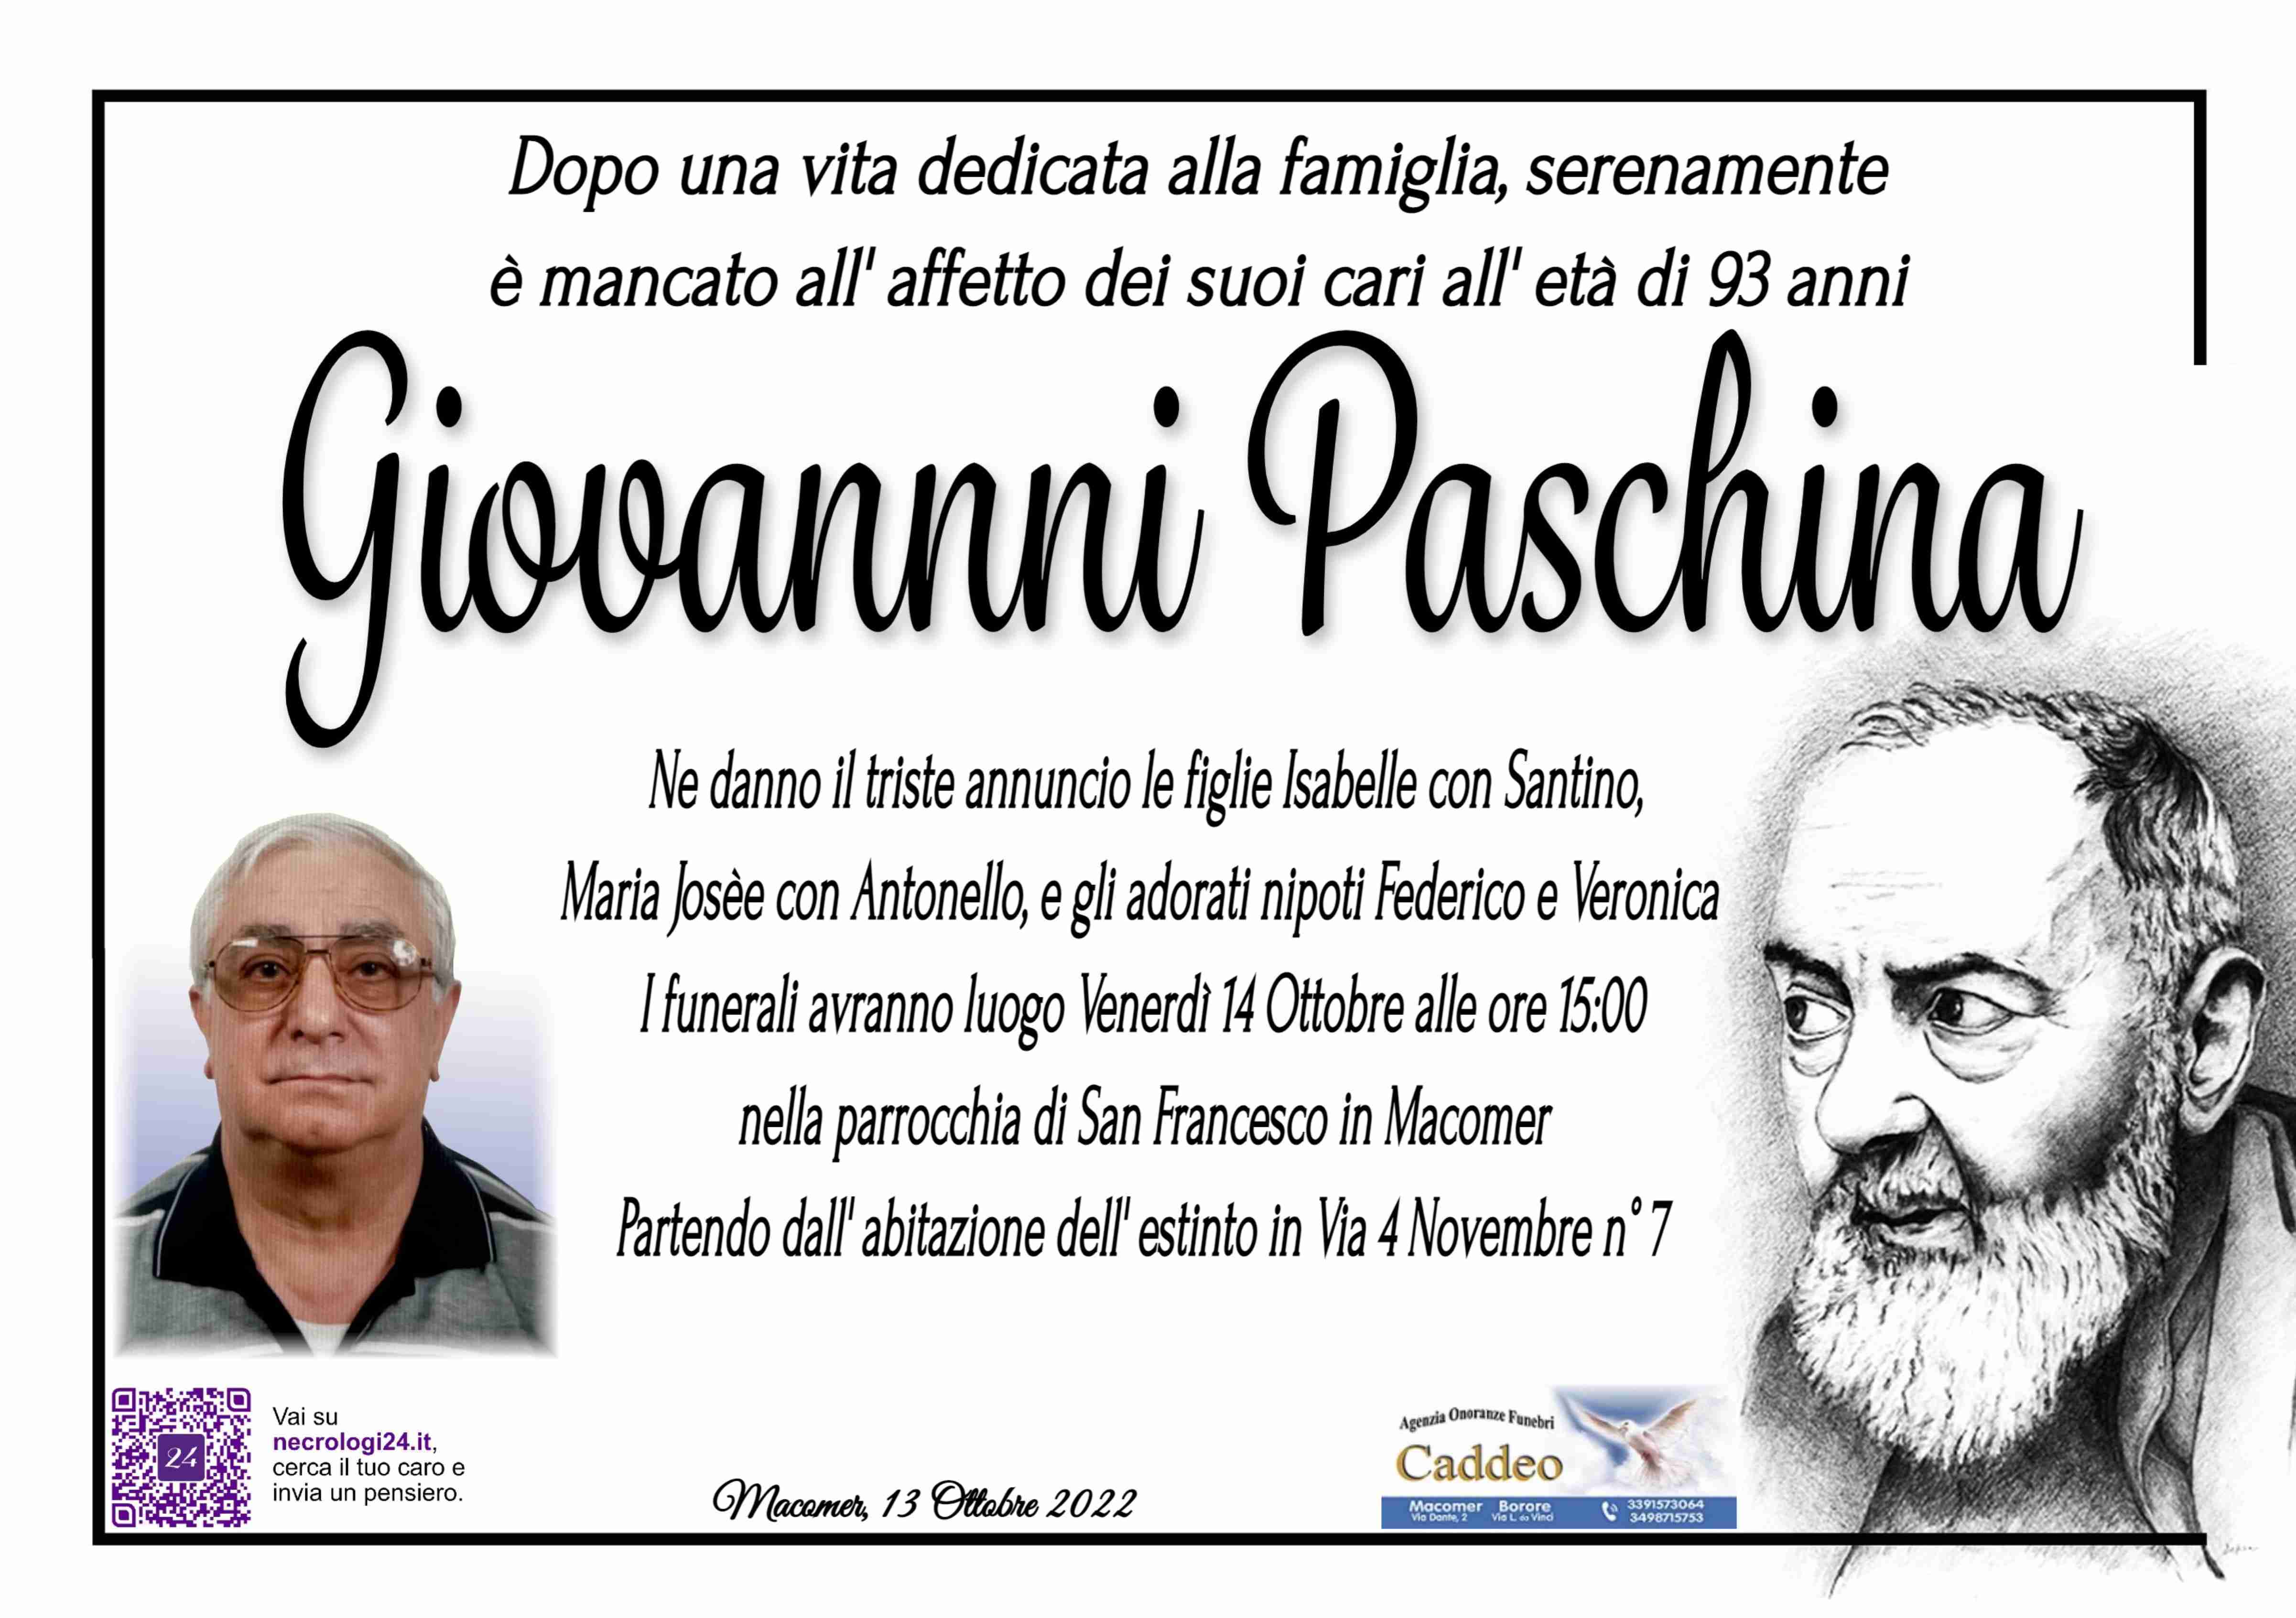 Giovanni Paschina